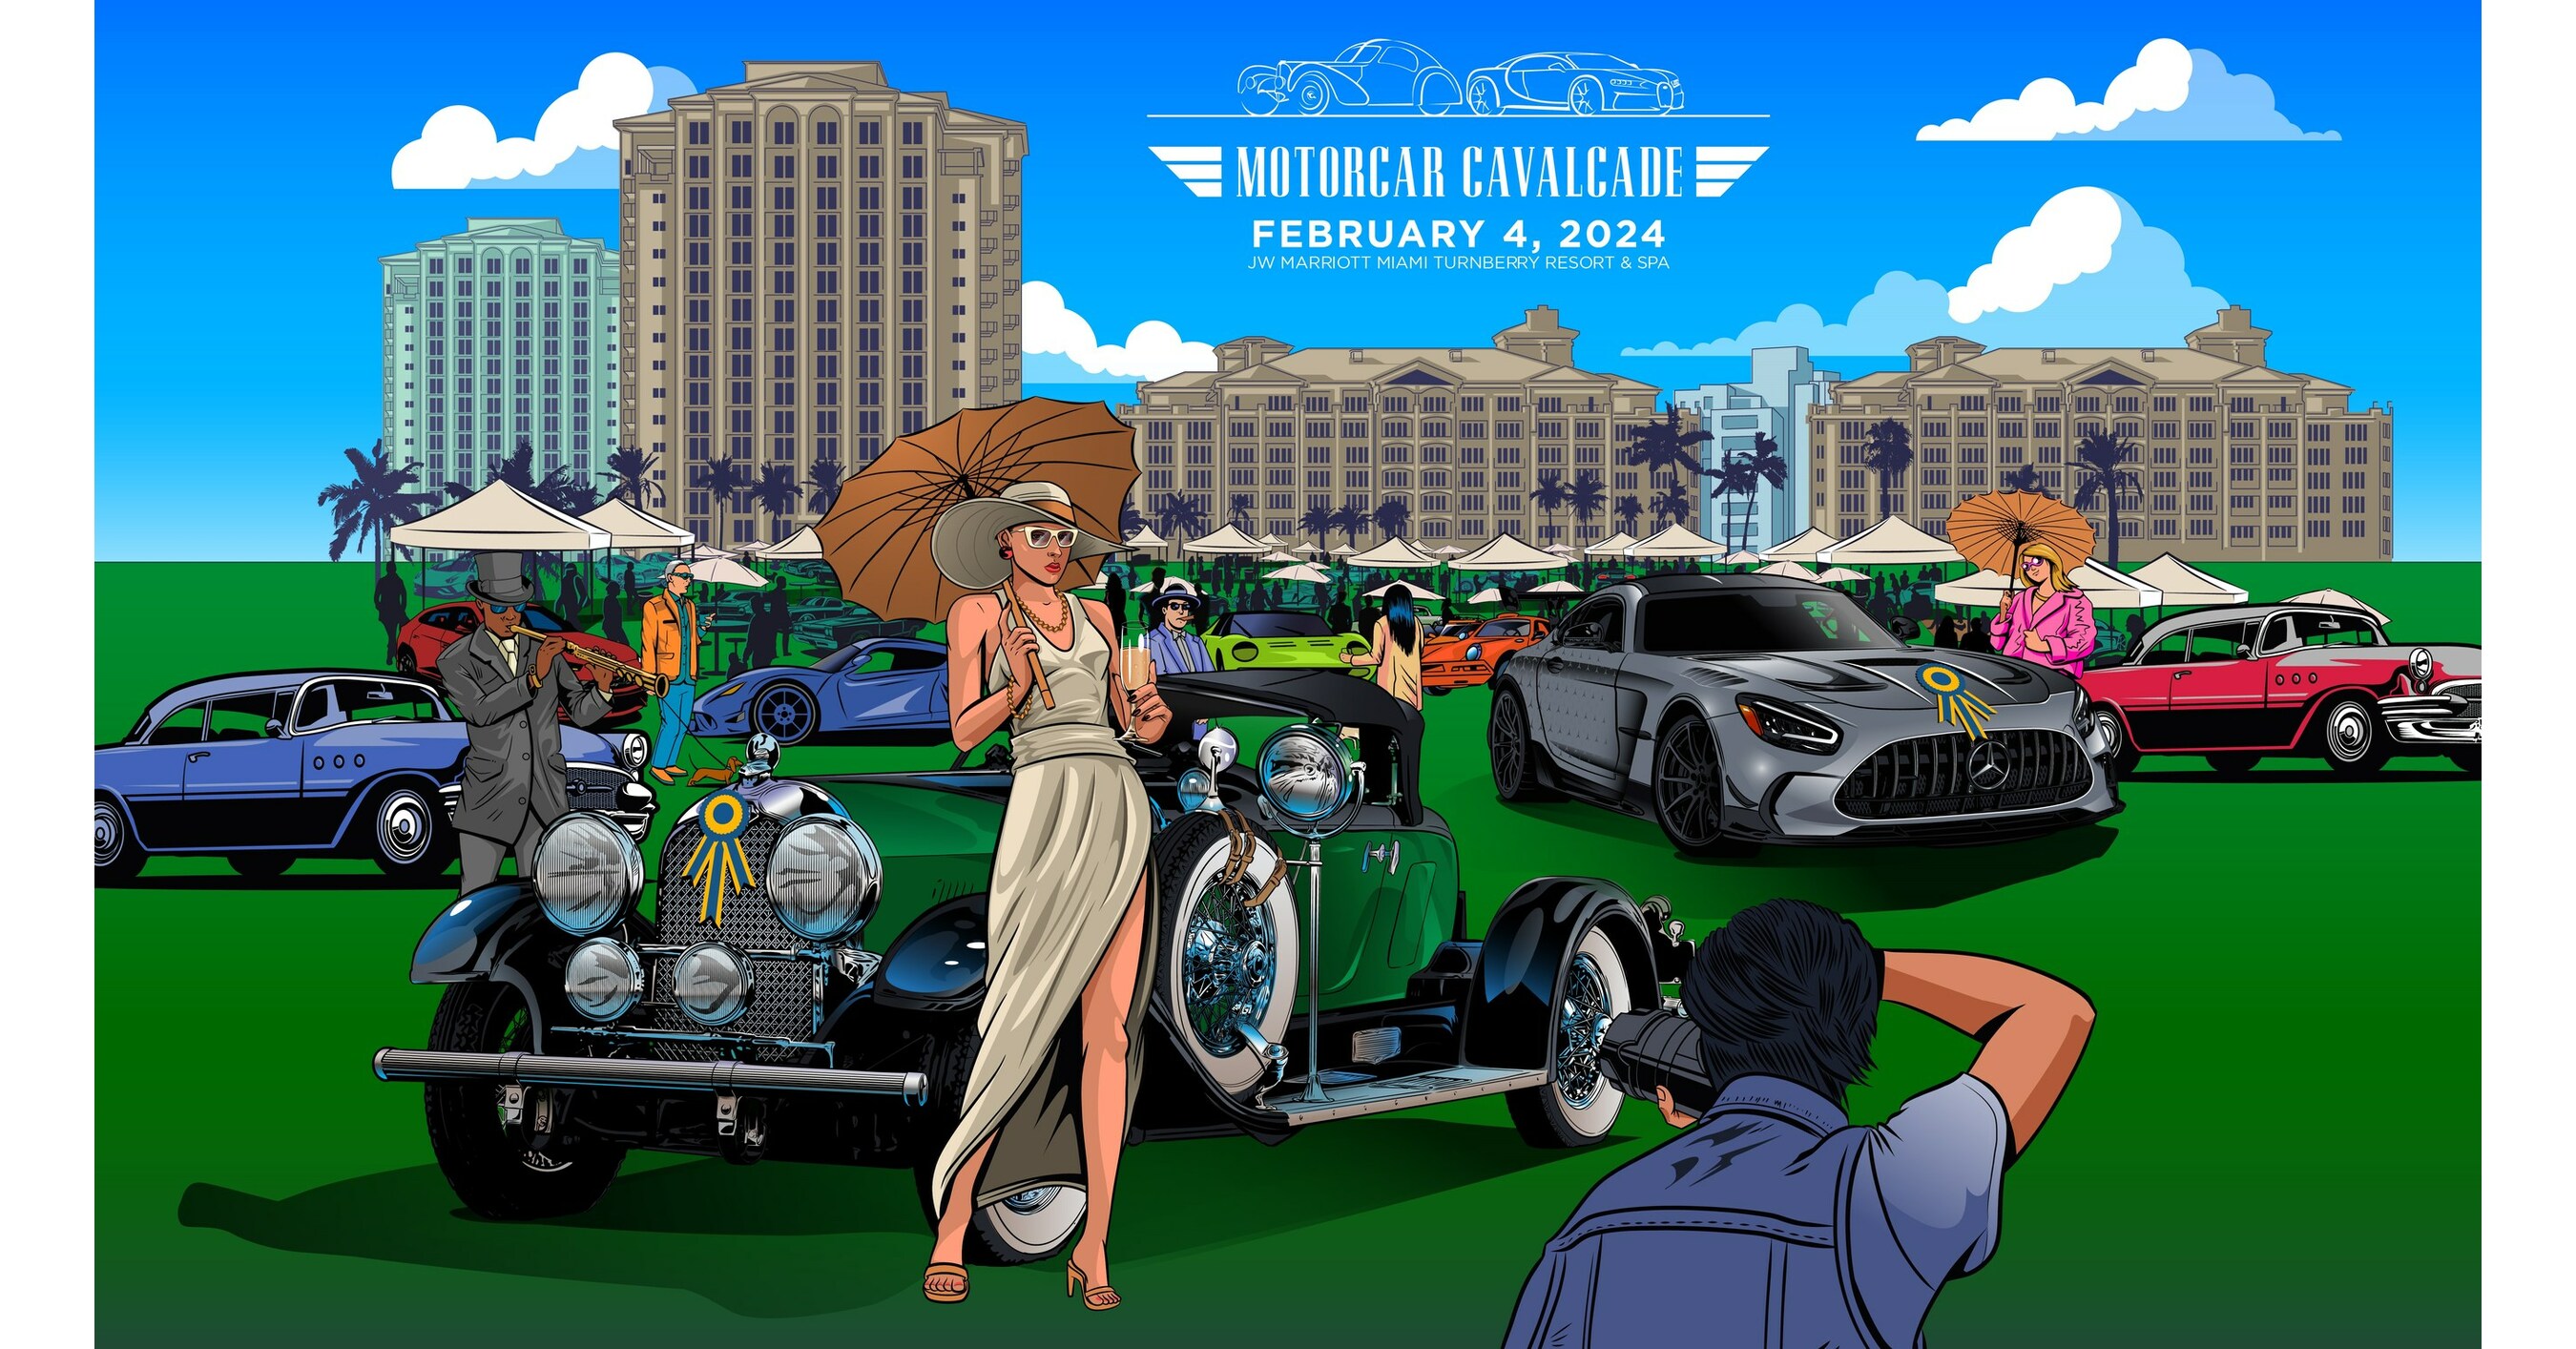 MOTORCAR CAVALCADE MIAMI ANNOUNCES THE 2024 CONCOURS D'ELEGANCE DATES ...